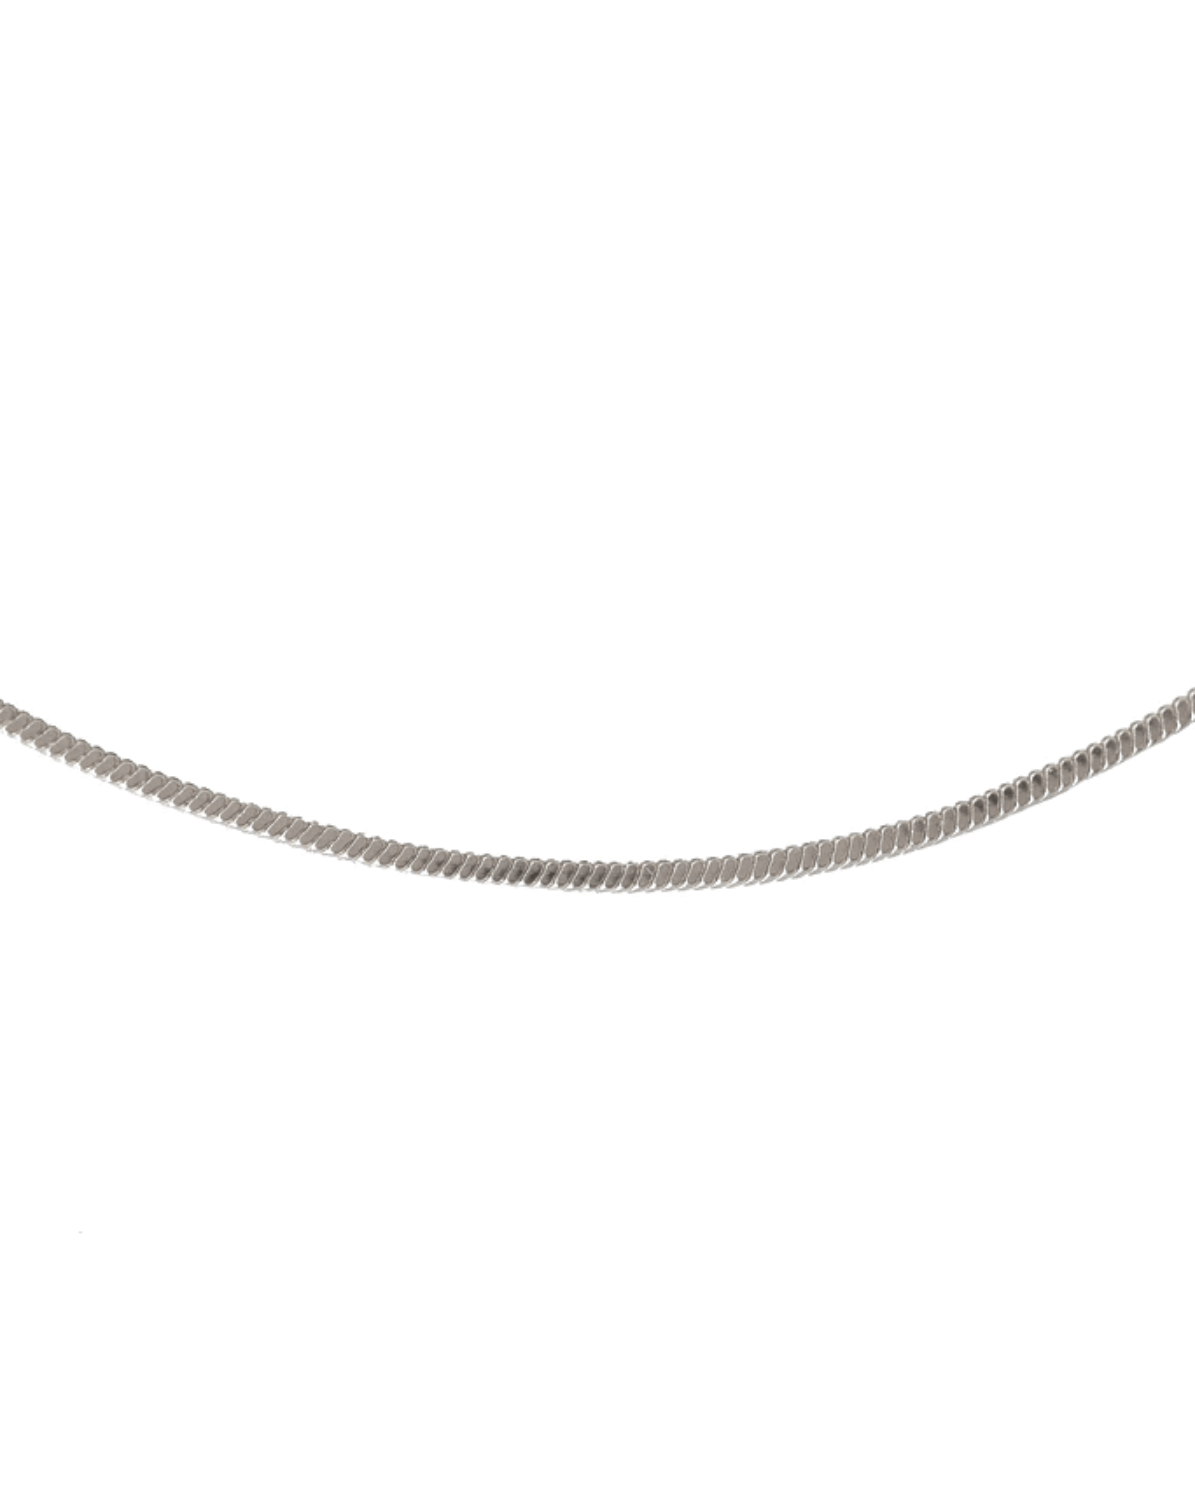 Square Snake Chain Necklace - Sterling Sliver